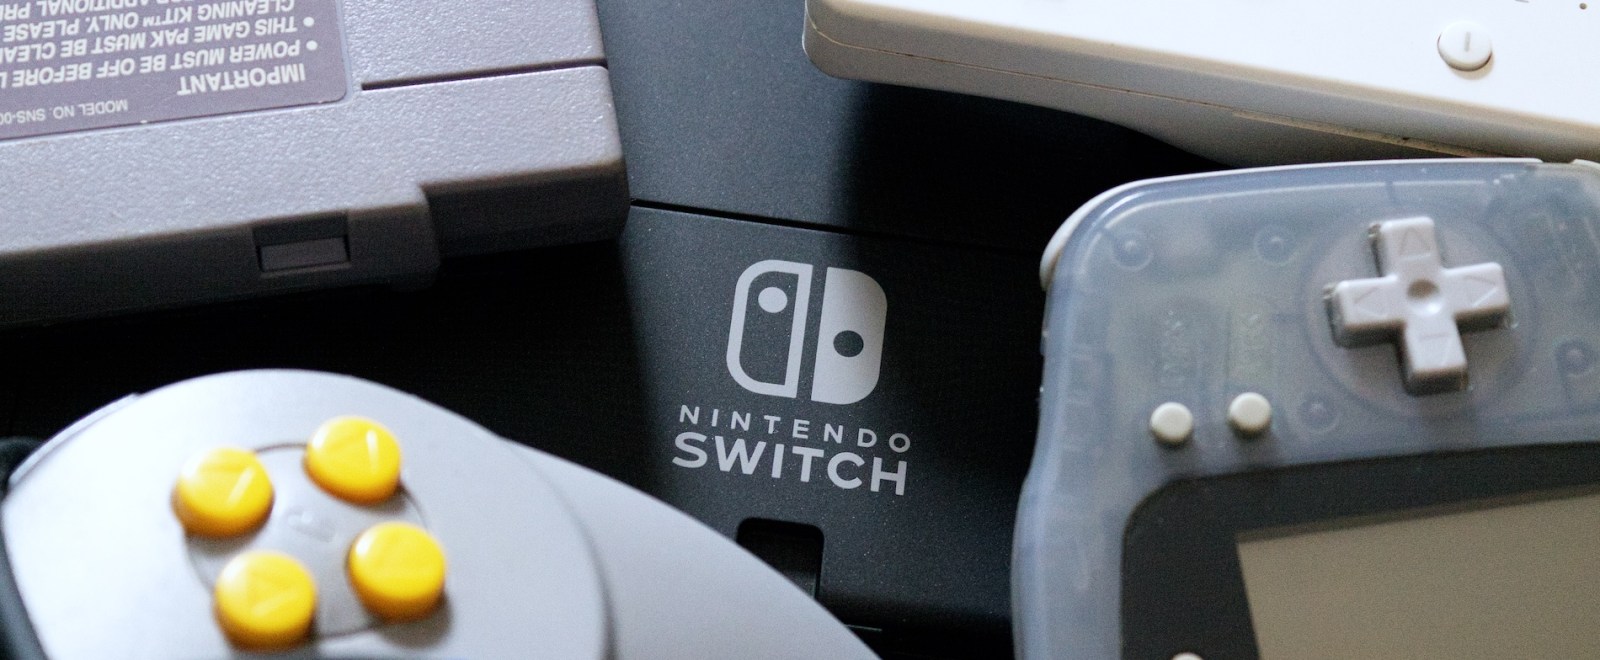 Nintendo Switch retro consoles